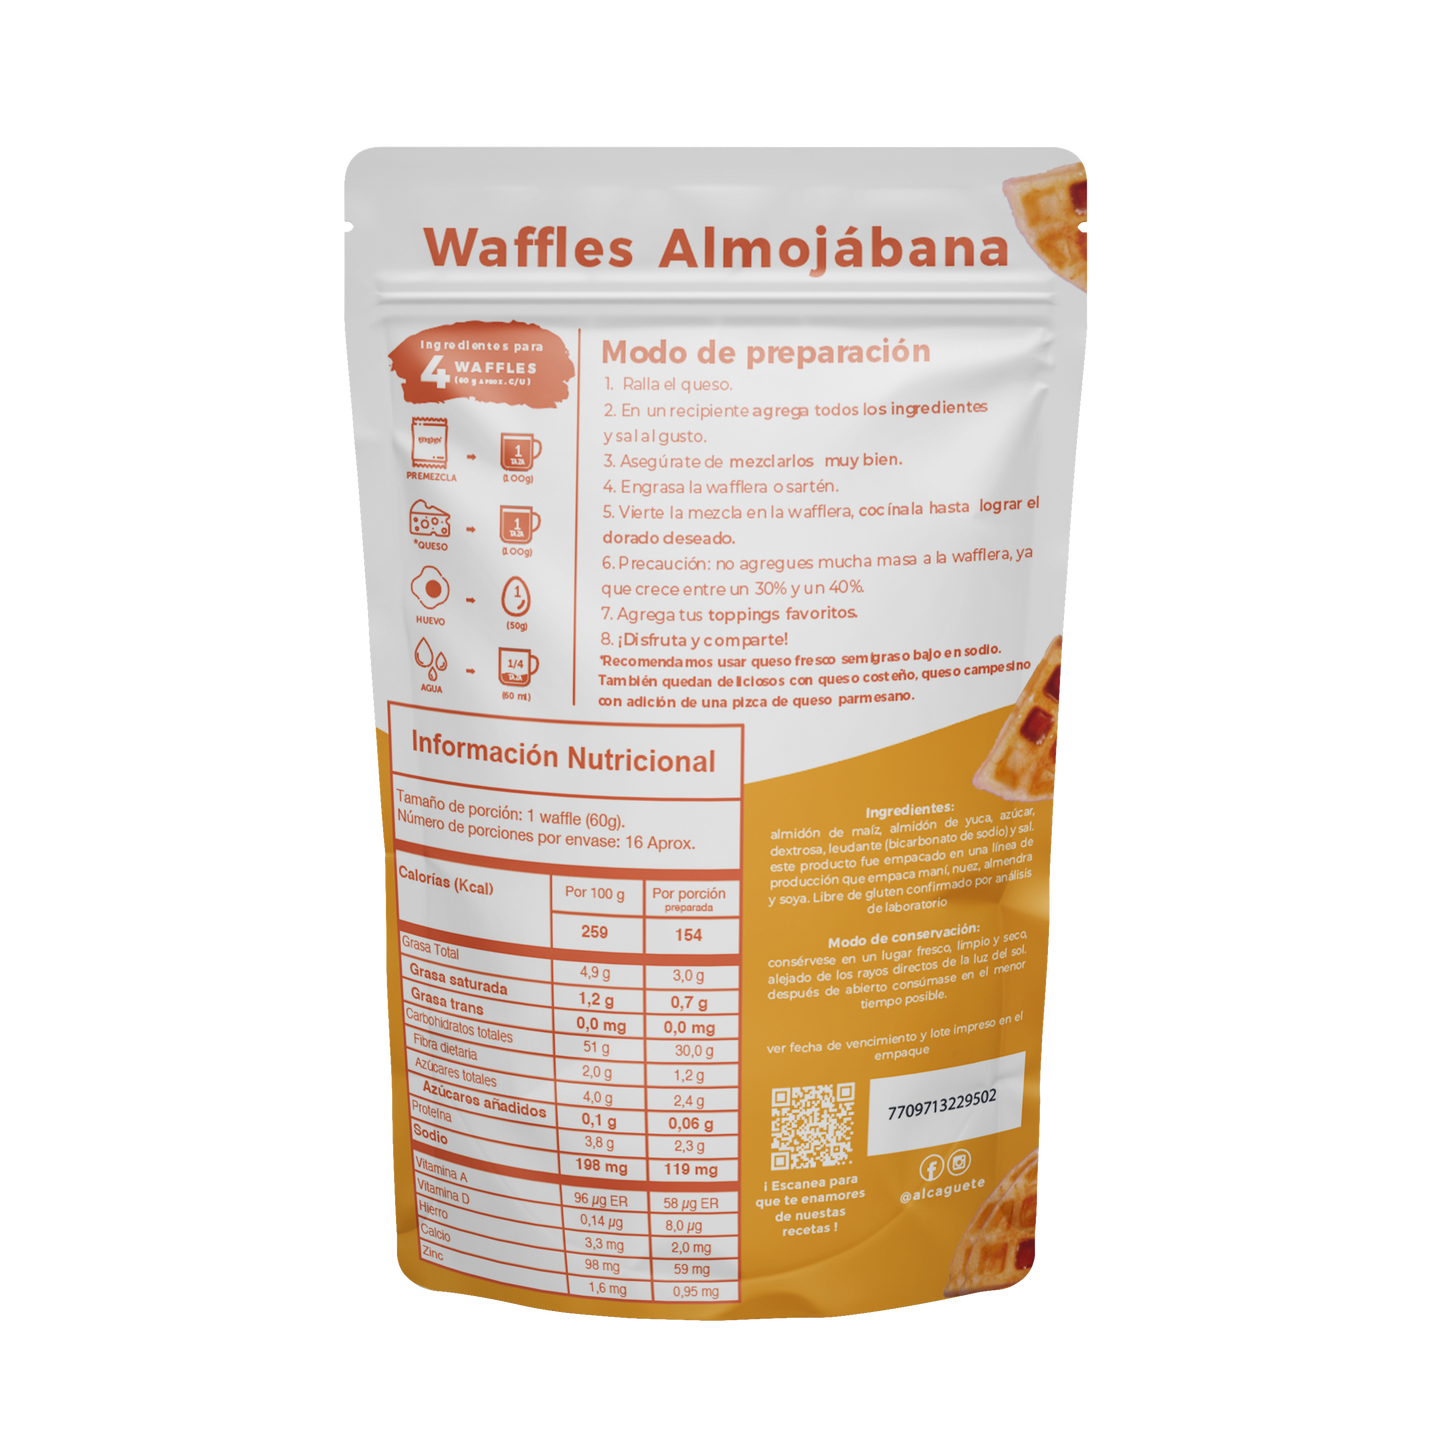 Premezcla waffles de Almojabana 400g